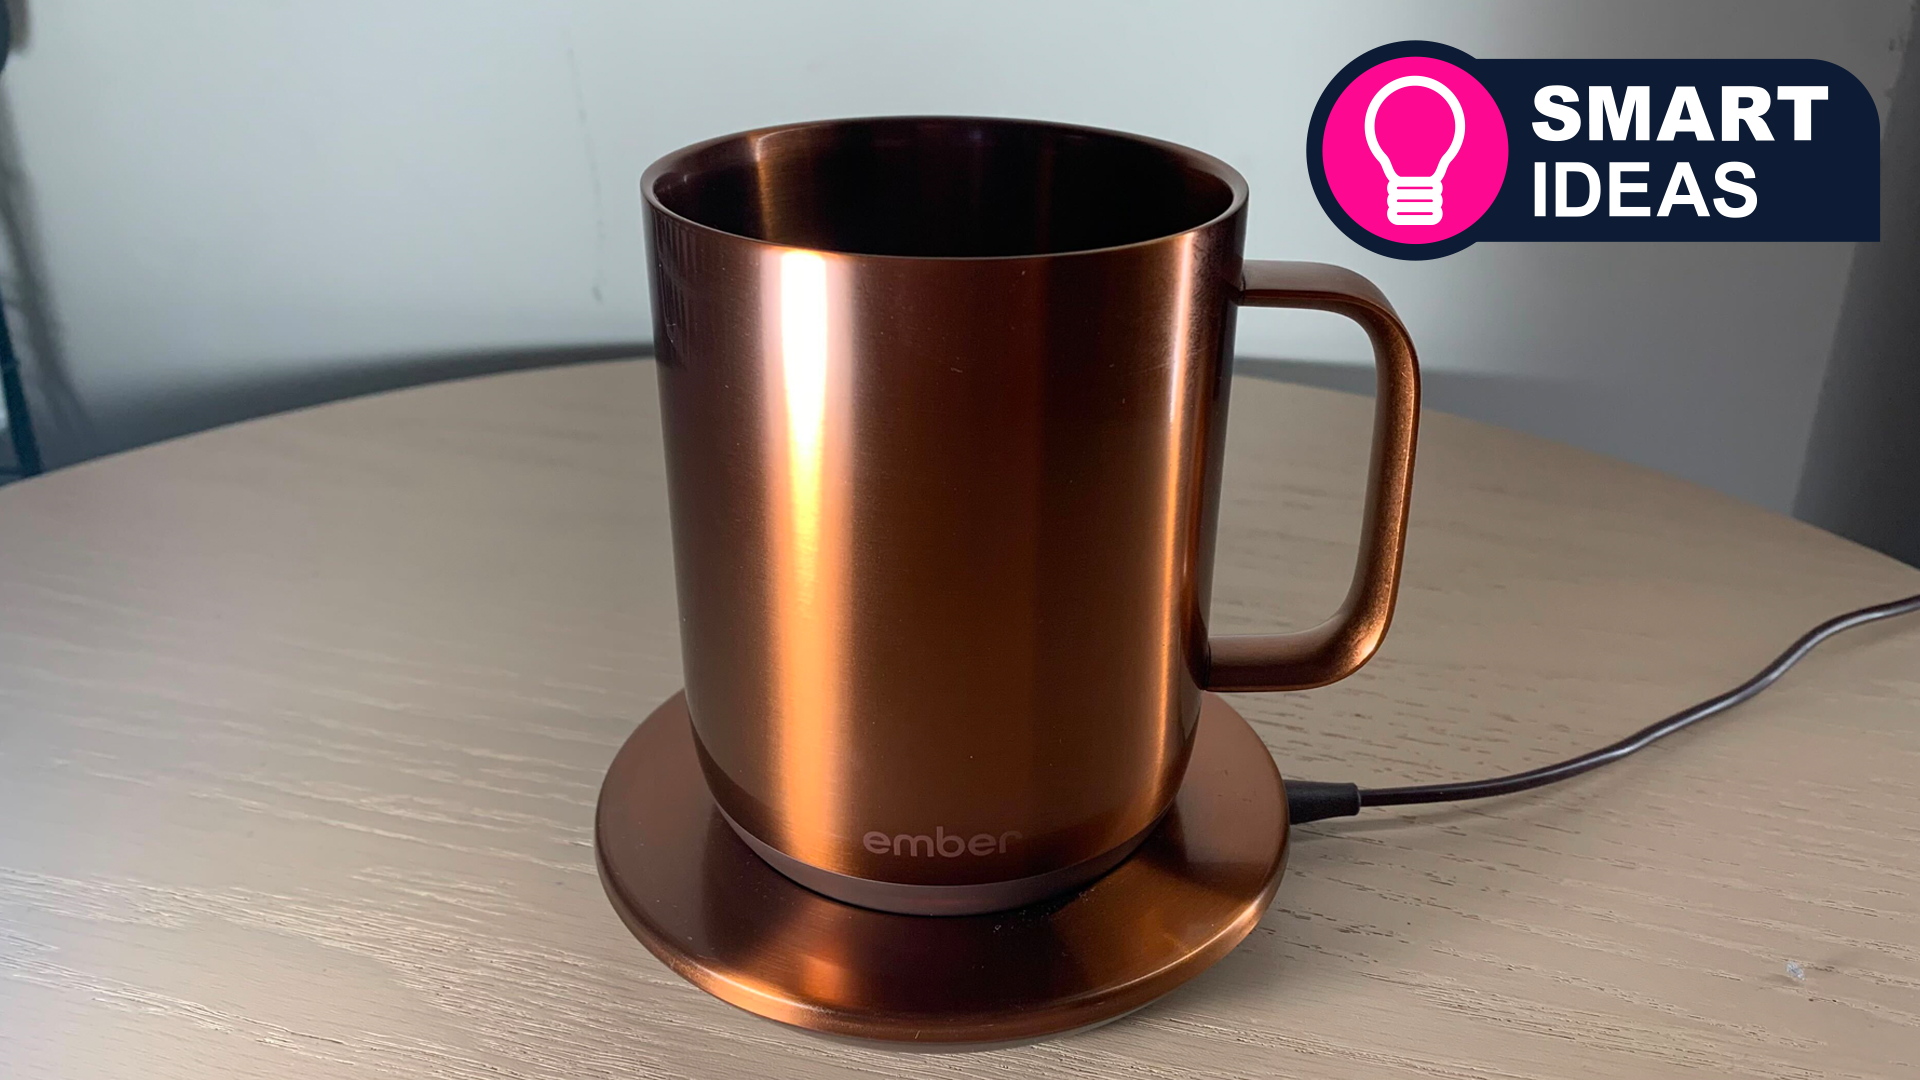 Ember Temperature Control Ceramic Mug review: Never let your